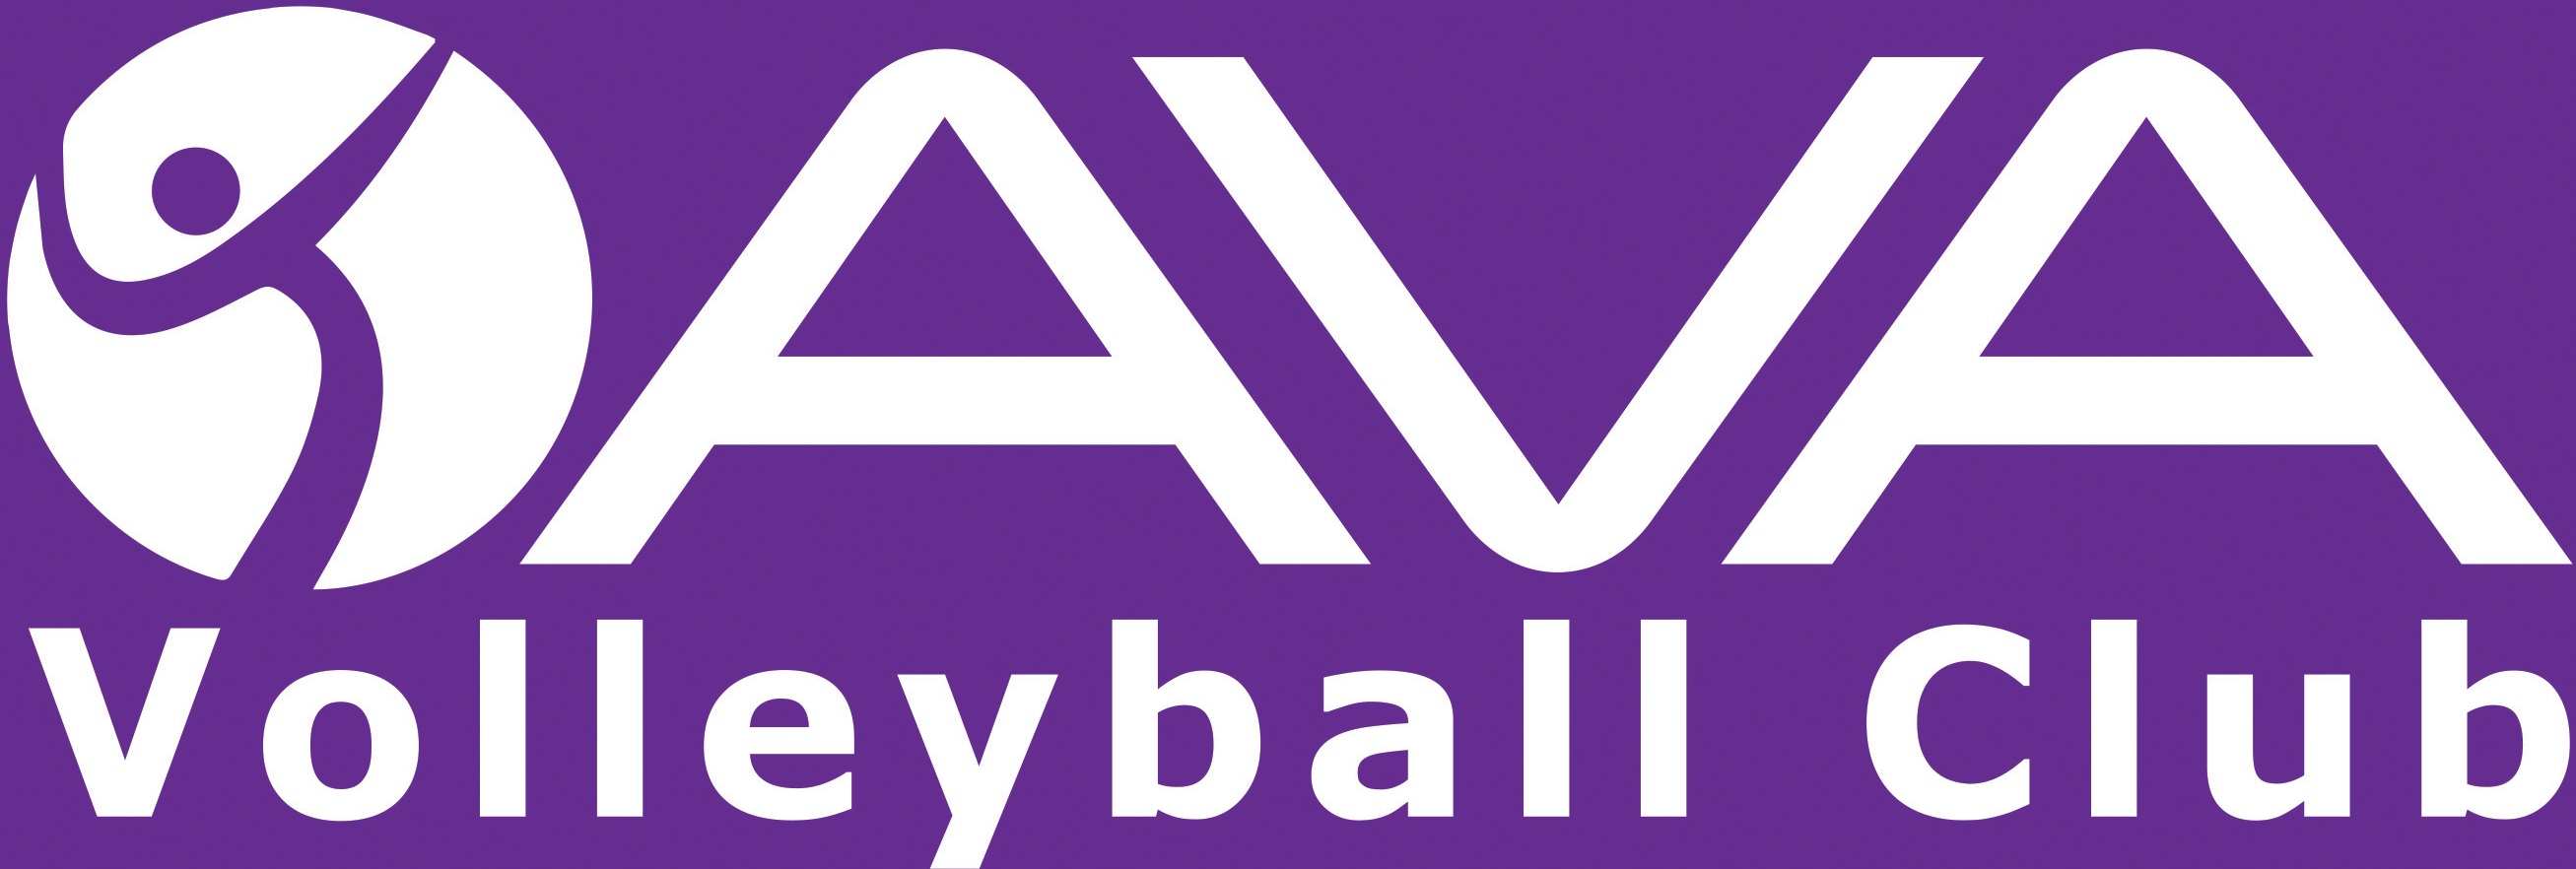 AVA Volleyball Club